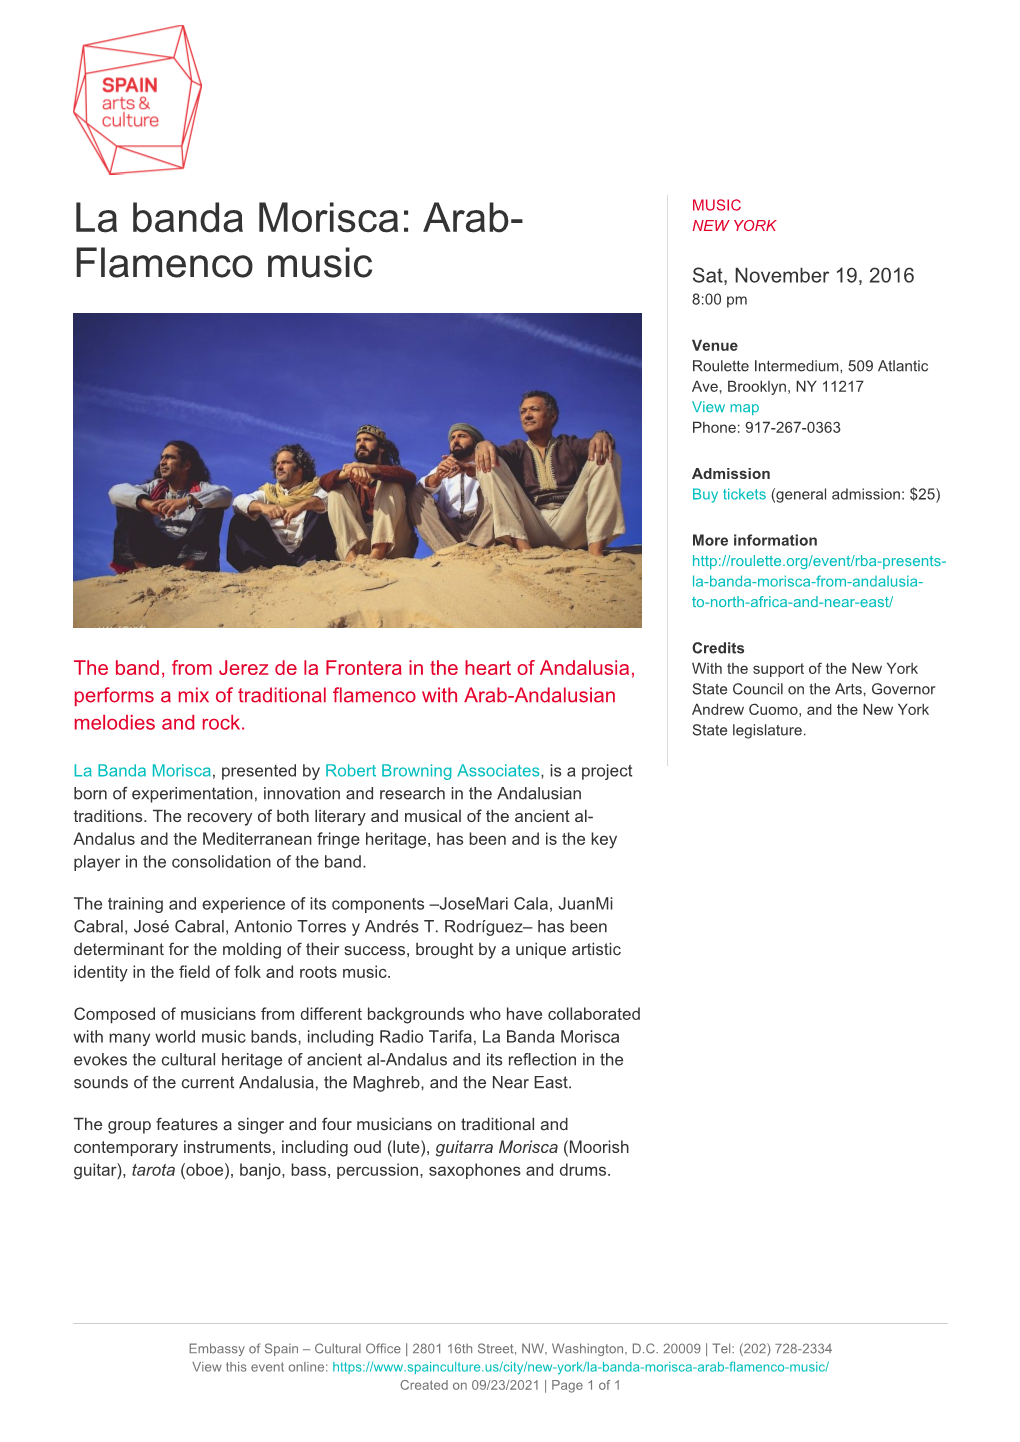 La Banda Morisca: Arab- Flamenco Music